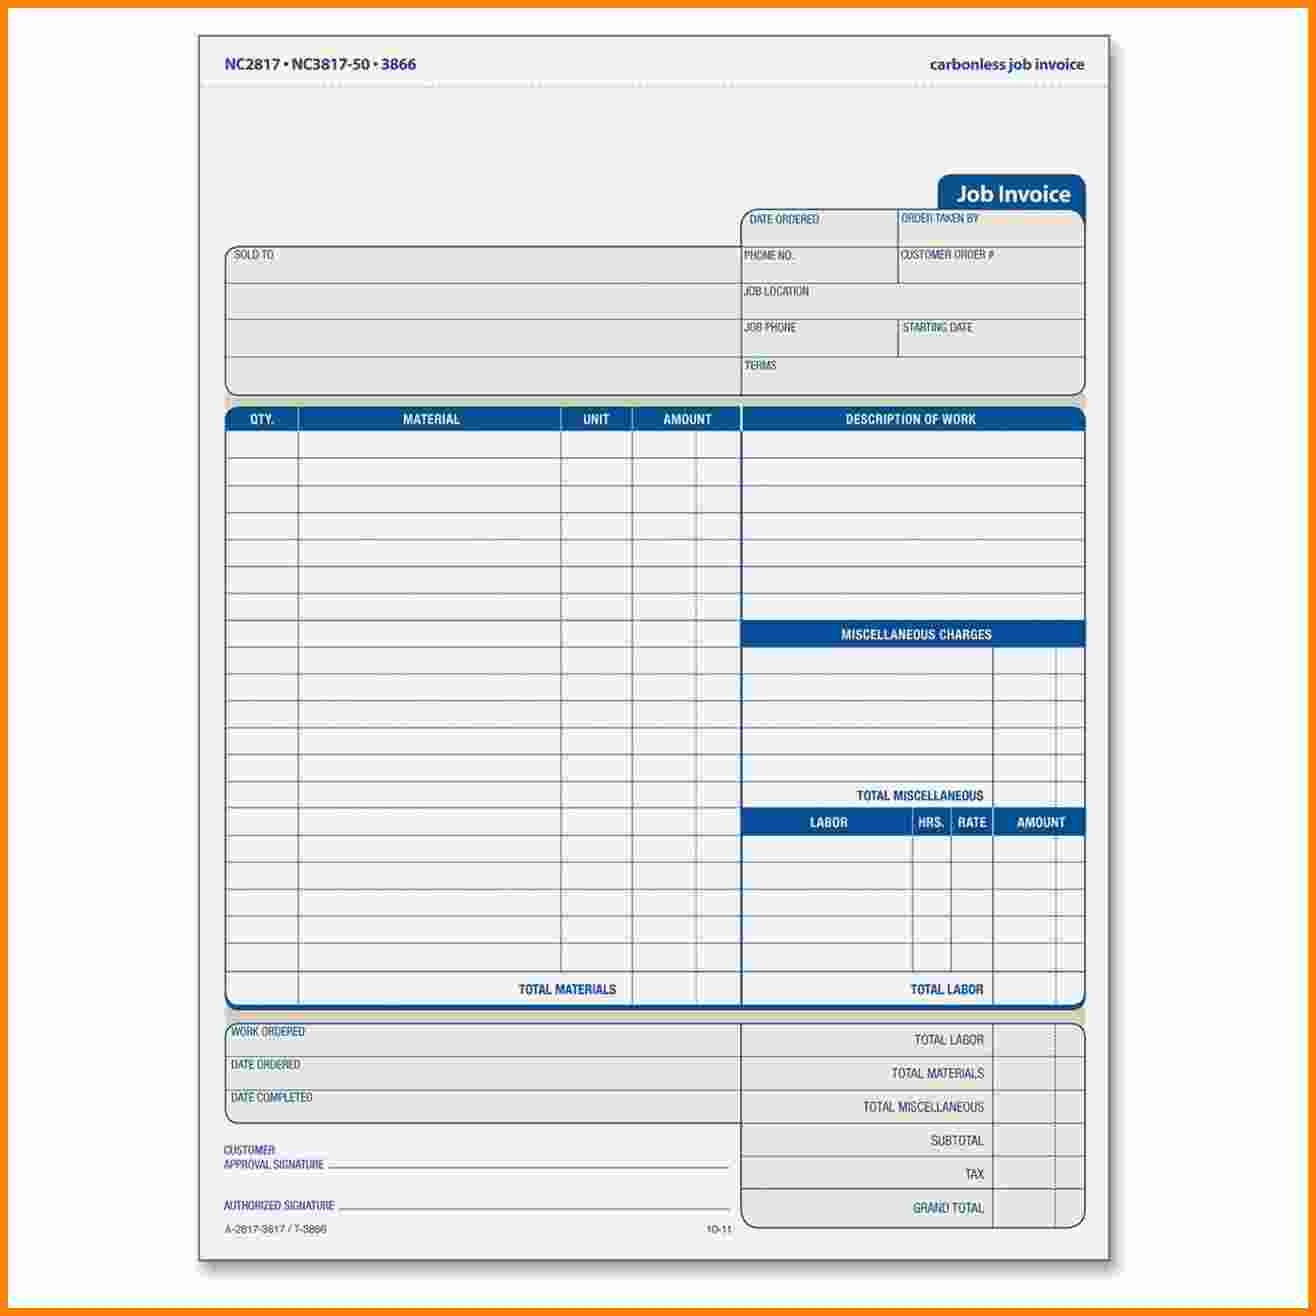 8 job invoice template ledger paper free 119 mdxar job invoice template